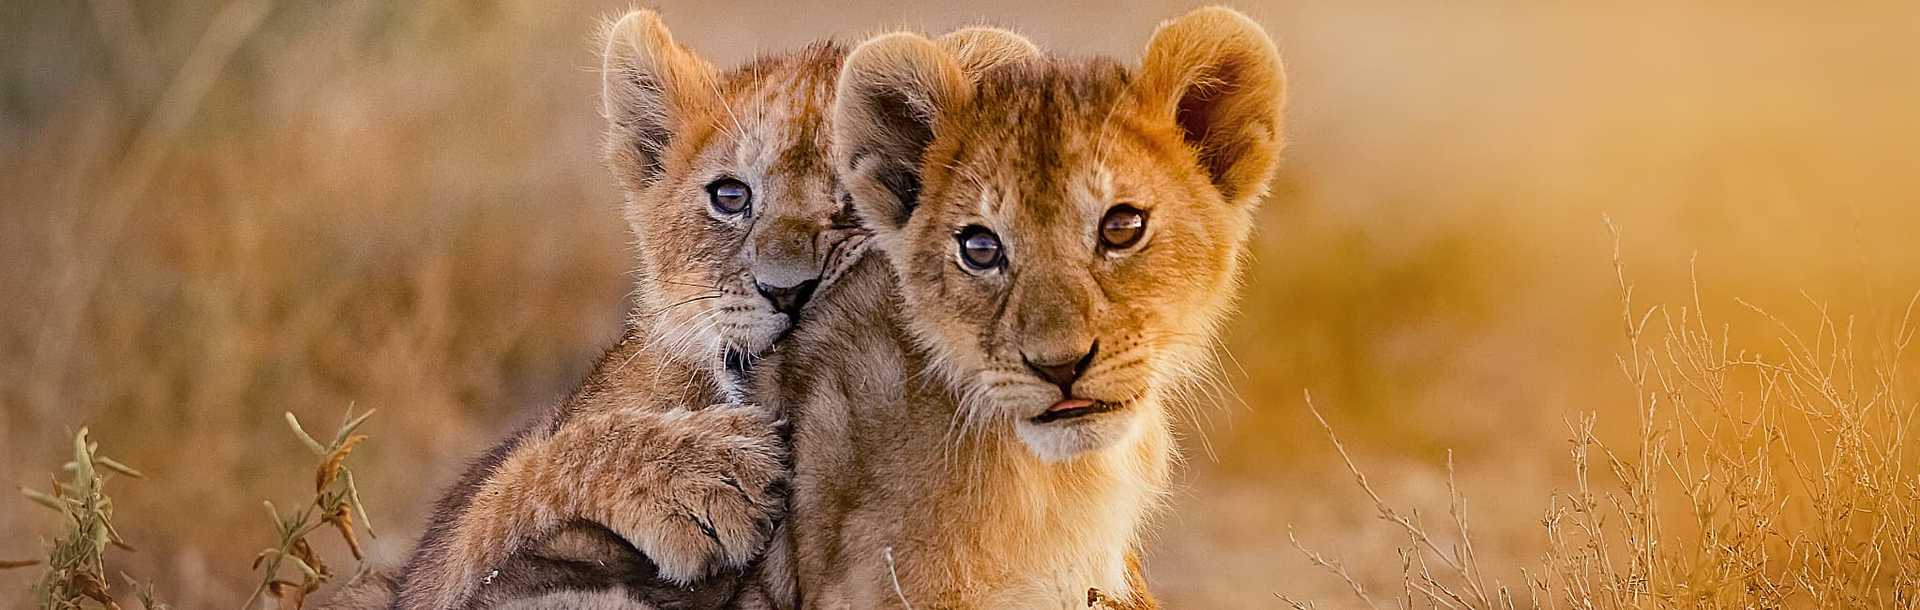 Two lion cubs in Kenya